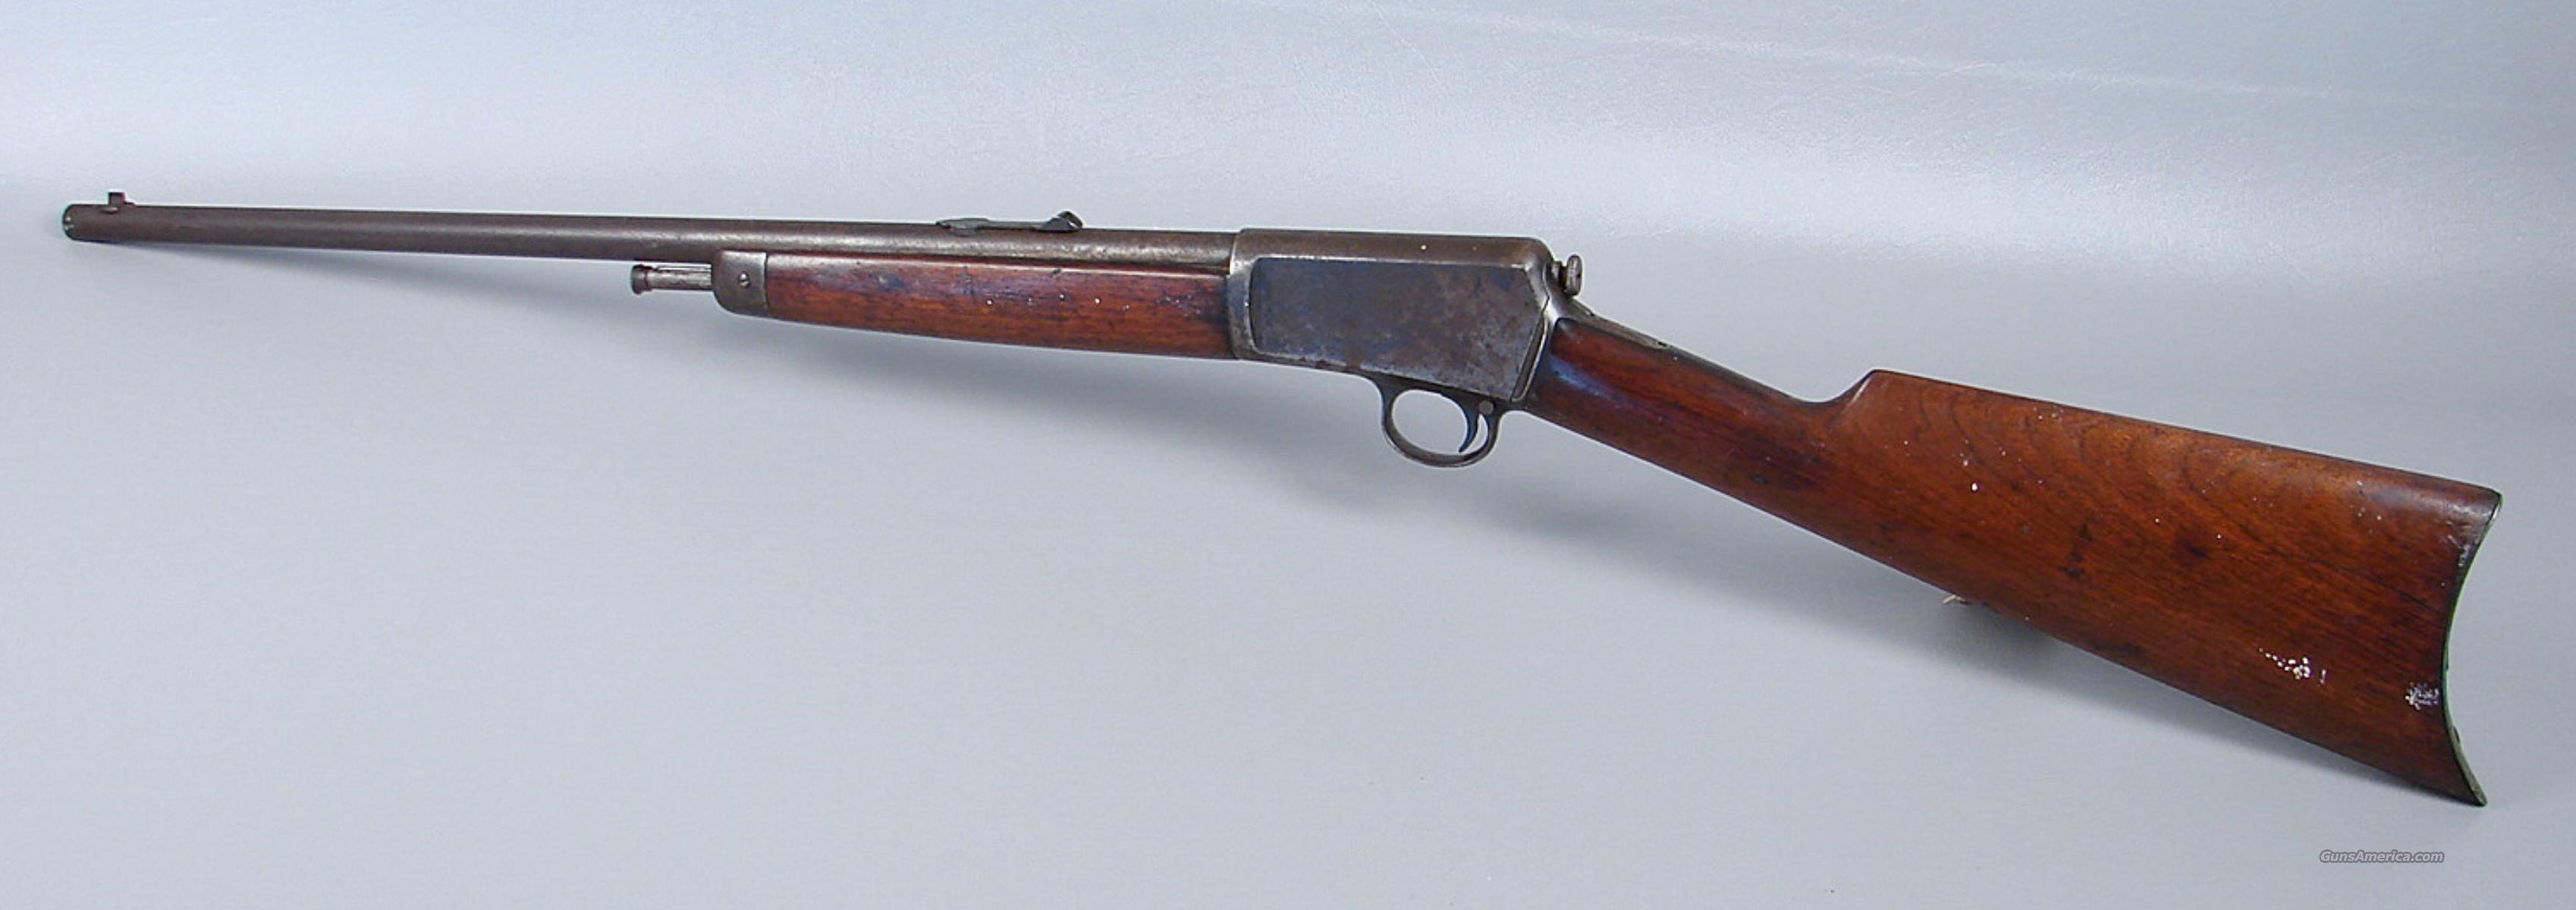 Winchester model 63 value